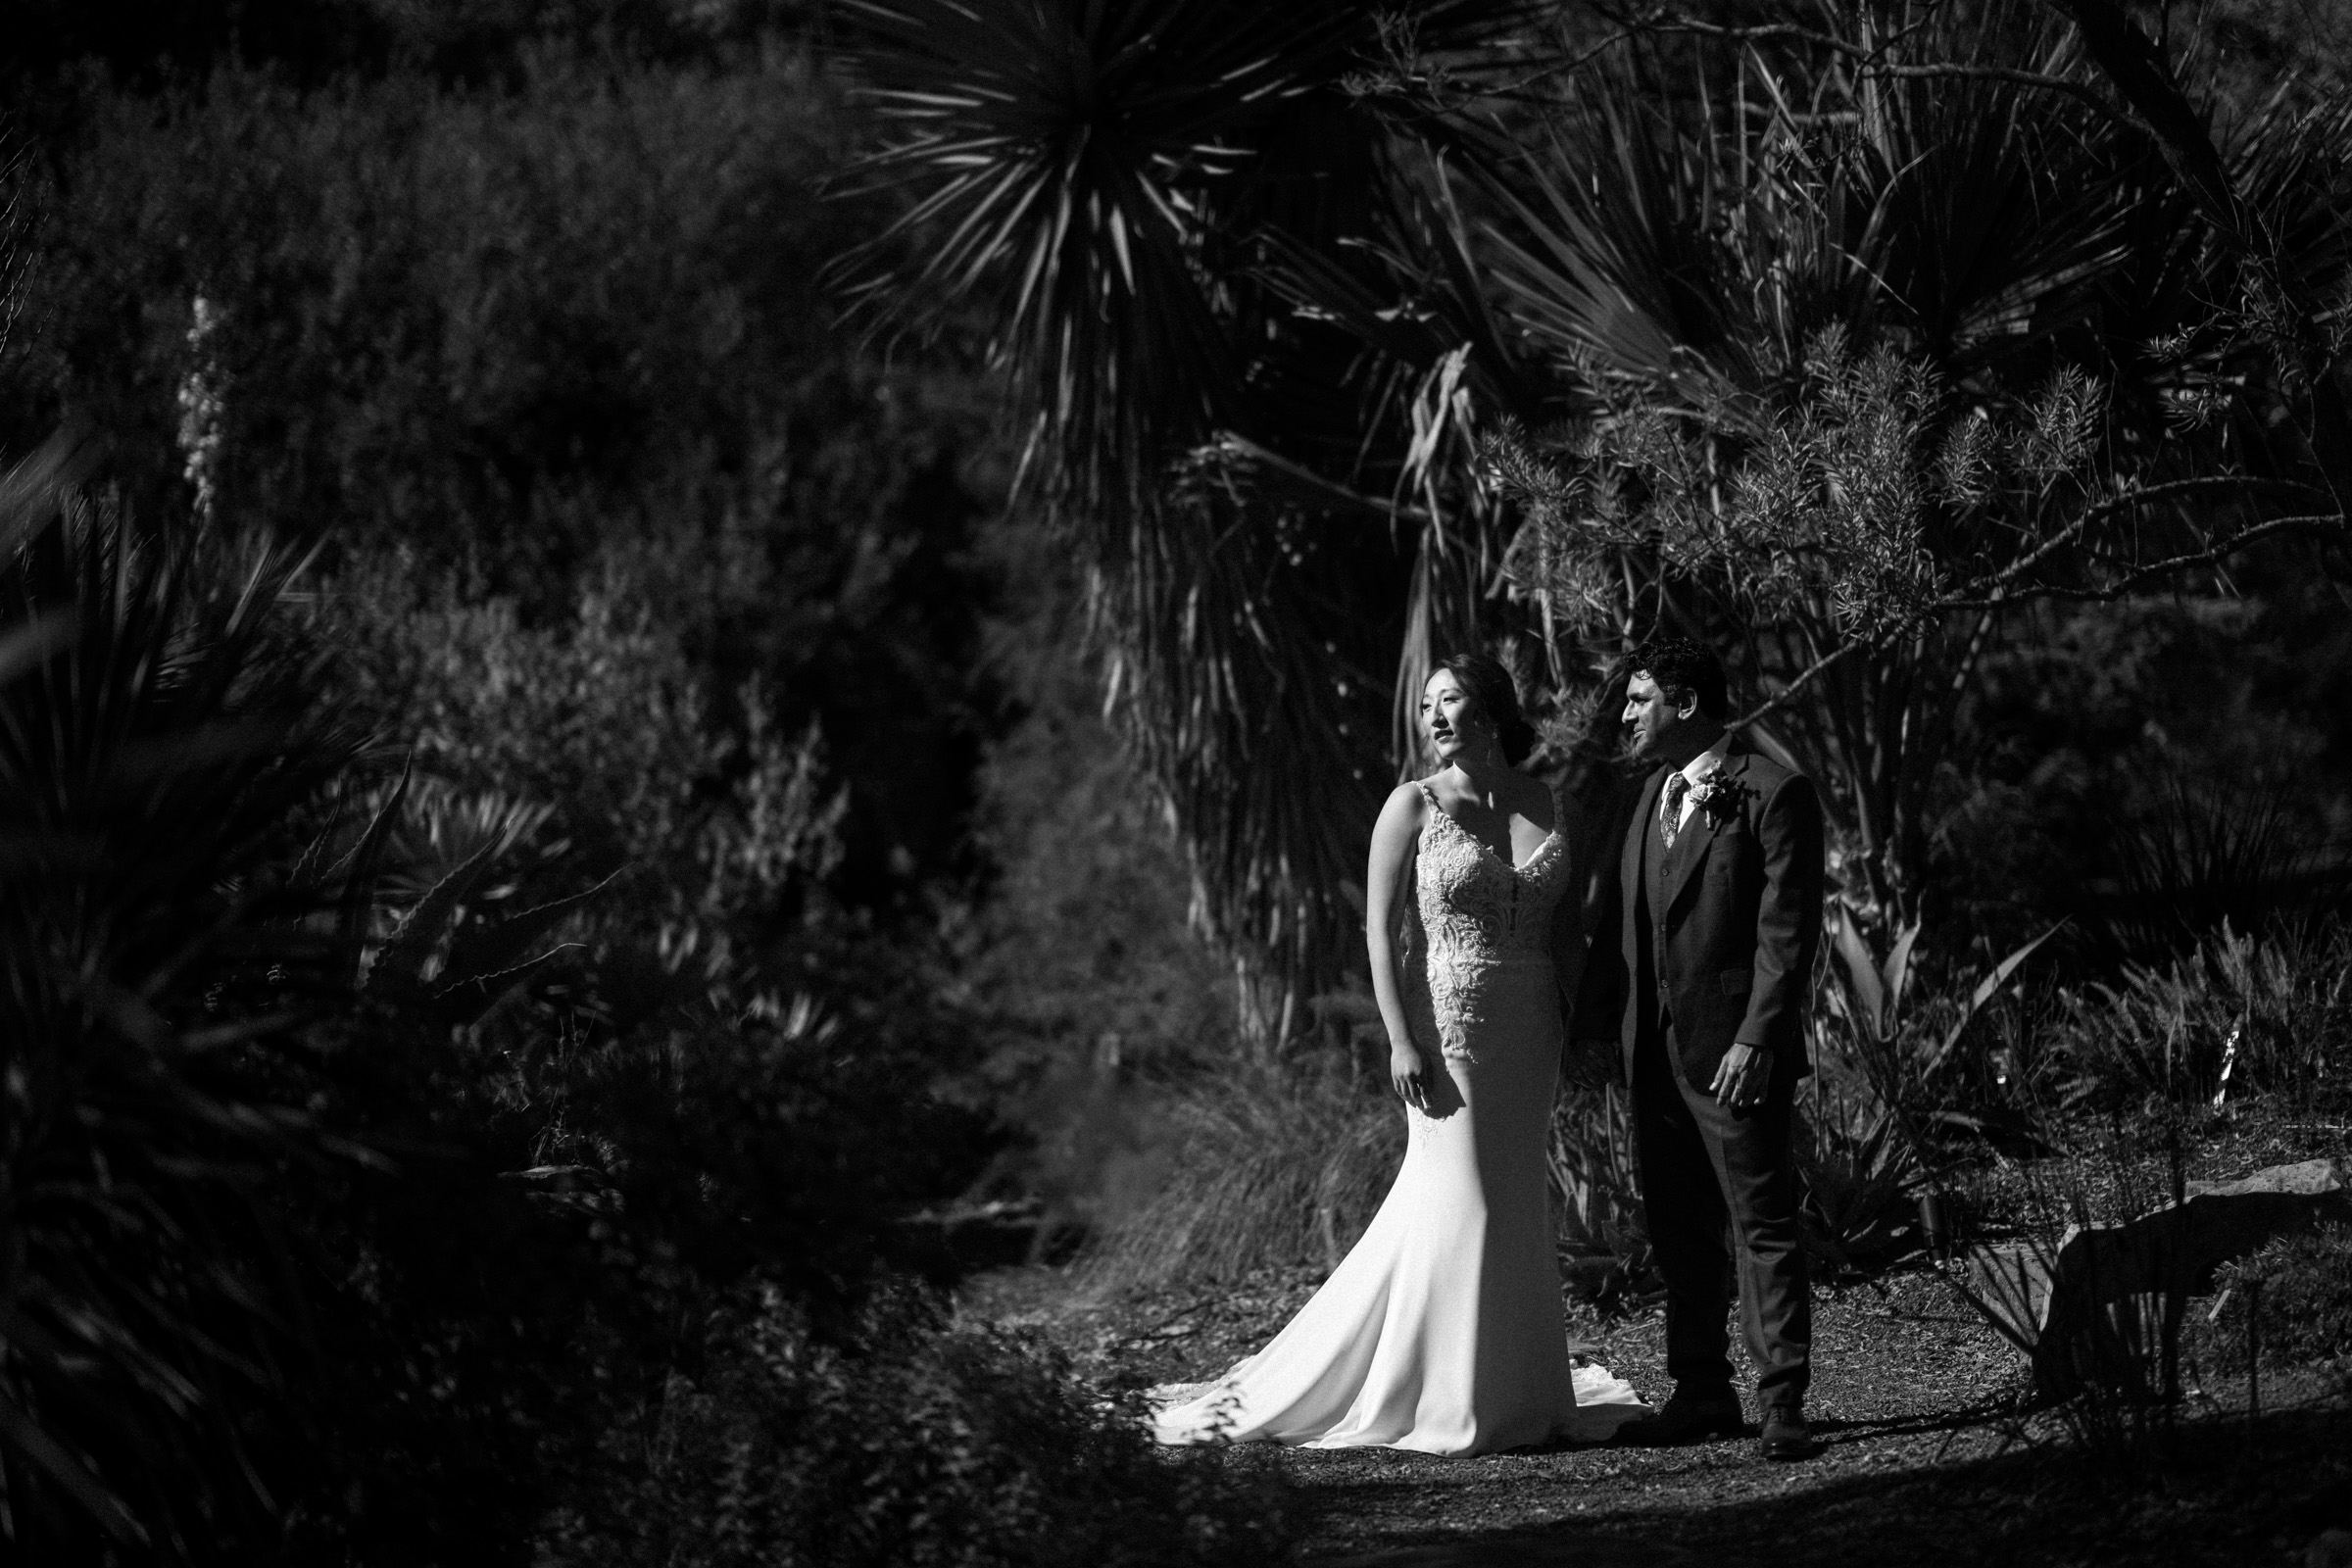 JC raulston arboretum wedding - holly & sut